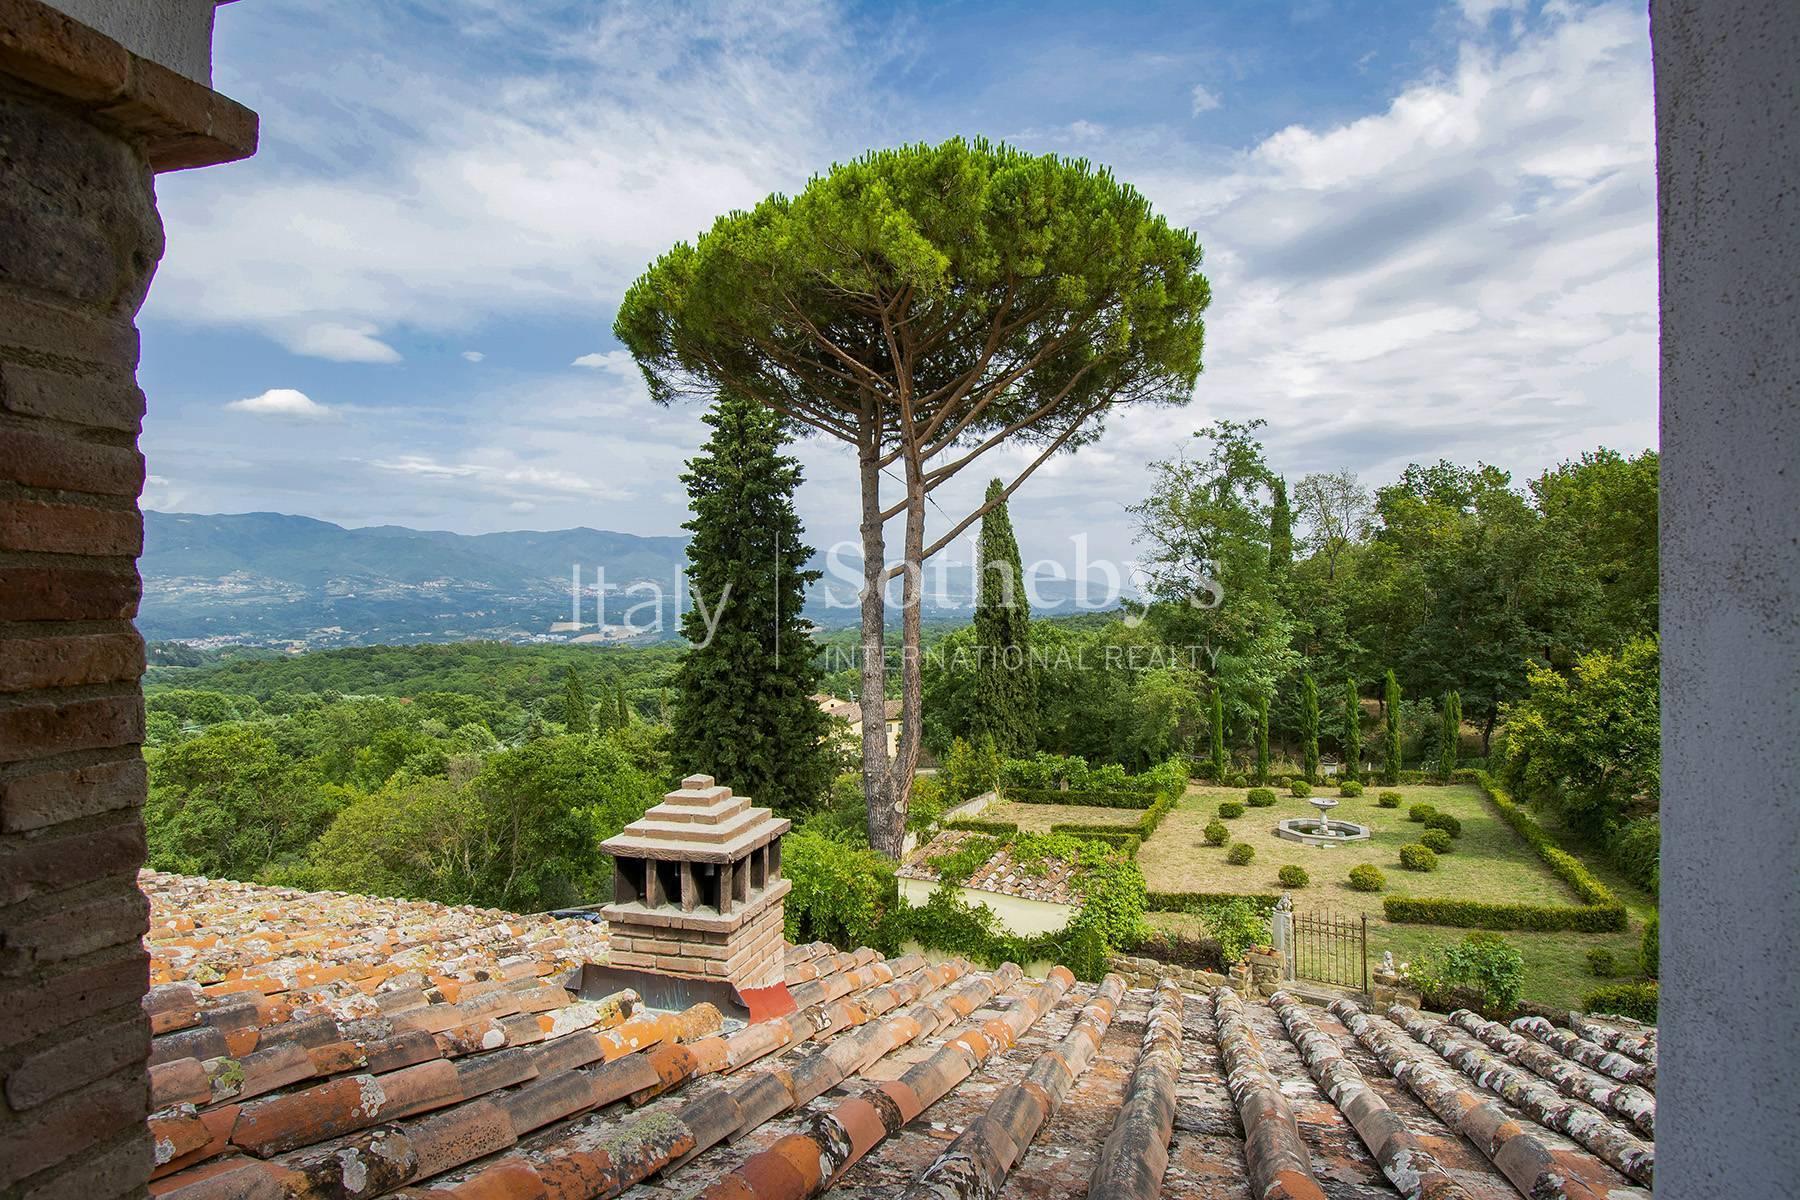 Renaissance Villa with italian garden and panoramic view - 27